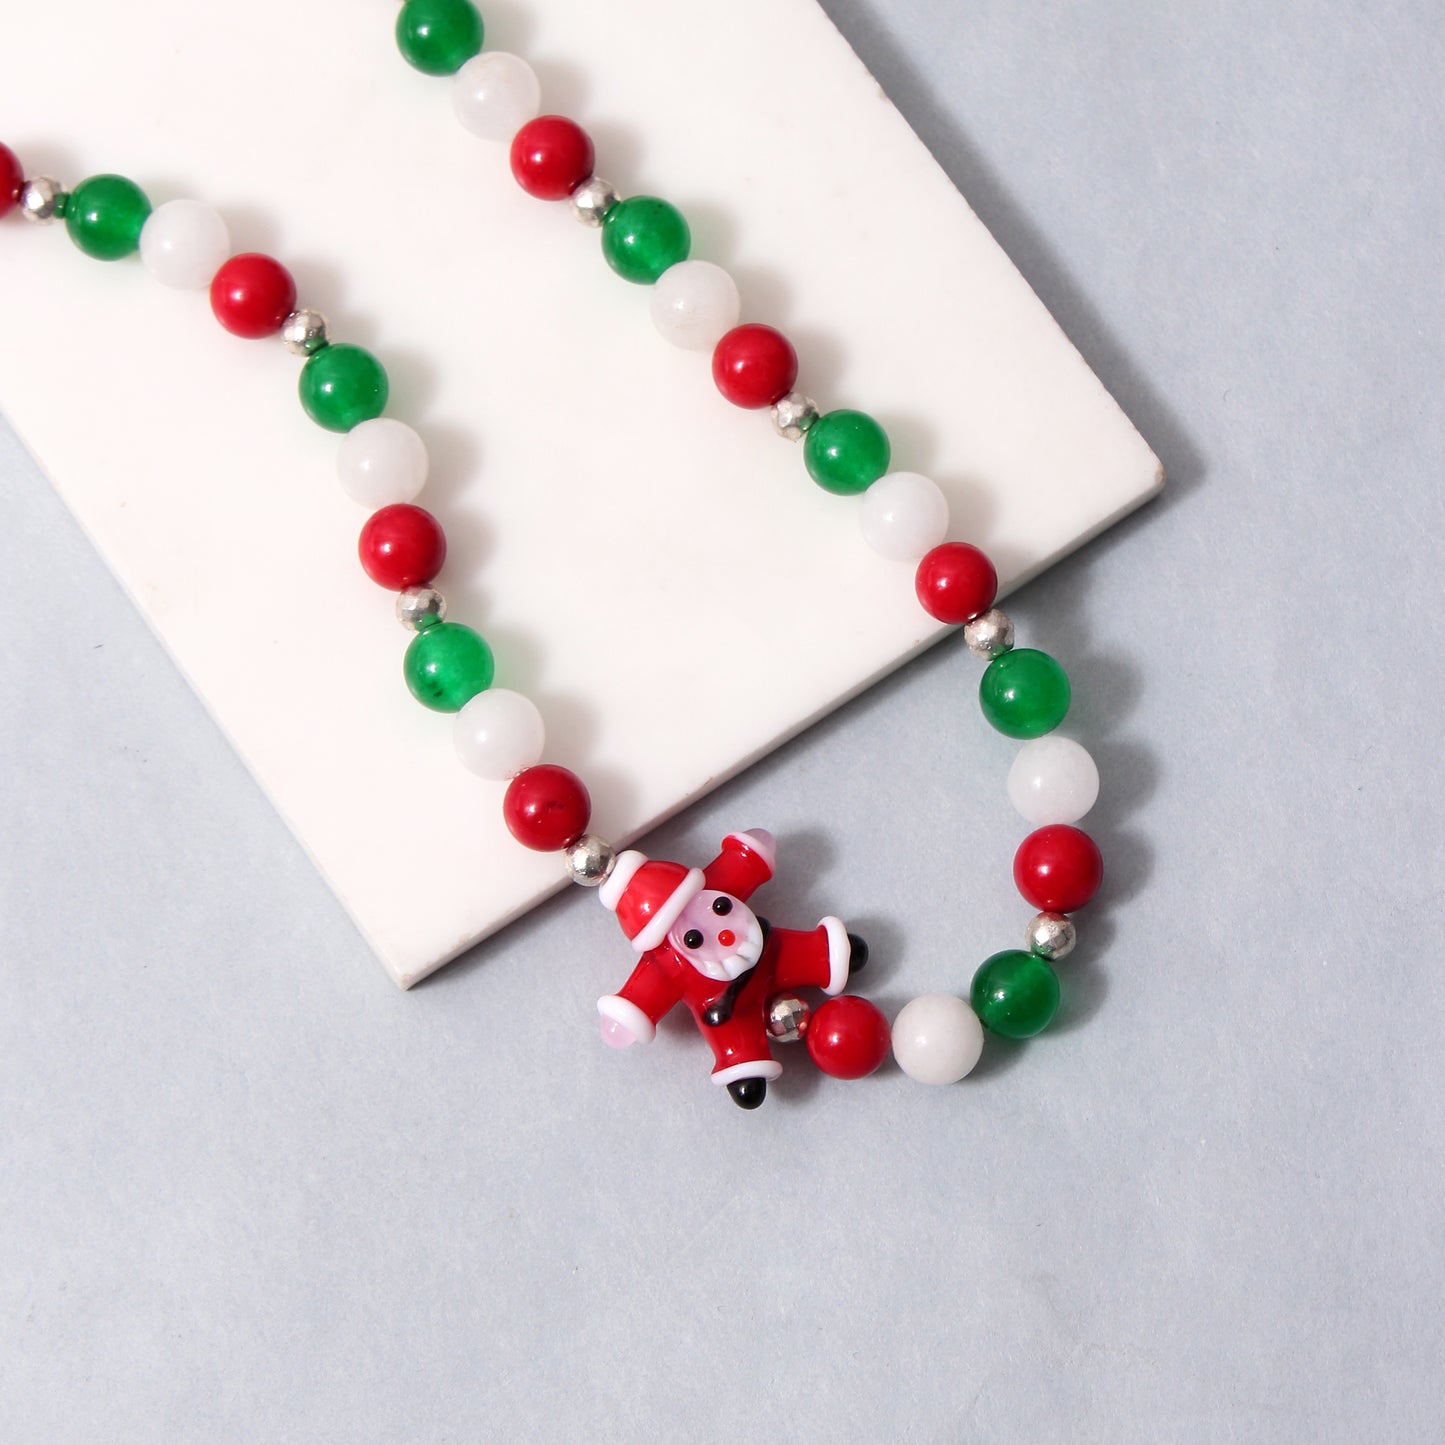 Gemstone Necklace and Bracelet with Cute Santa Charm, Santa Jewelry Set